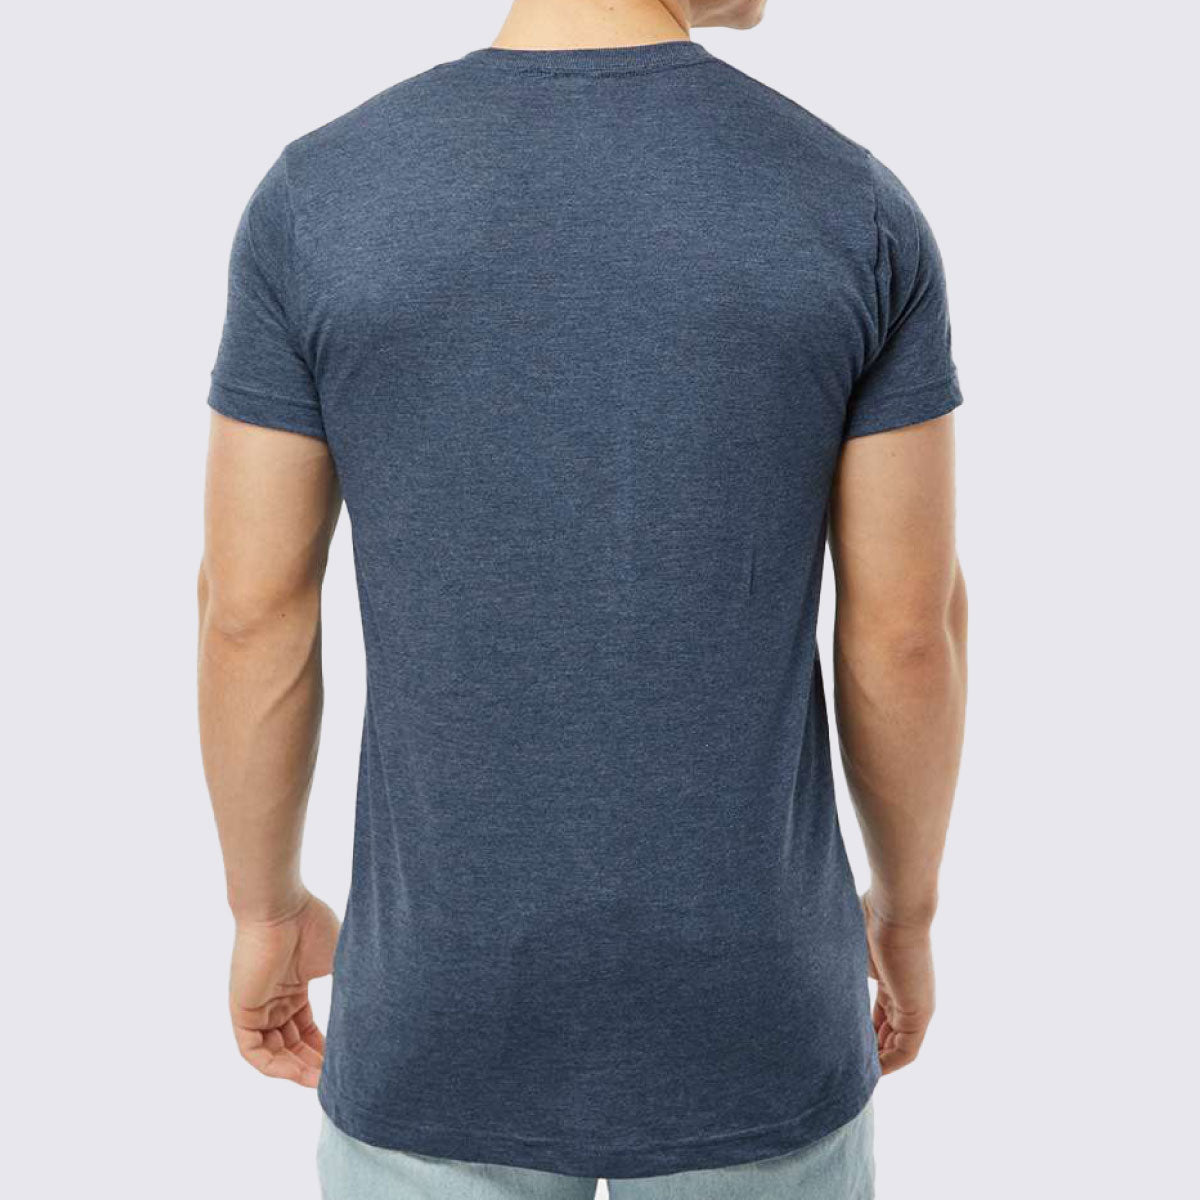 Heavily Caffeinated Unisex Fine Jersey T-Shirt